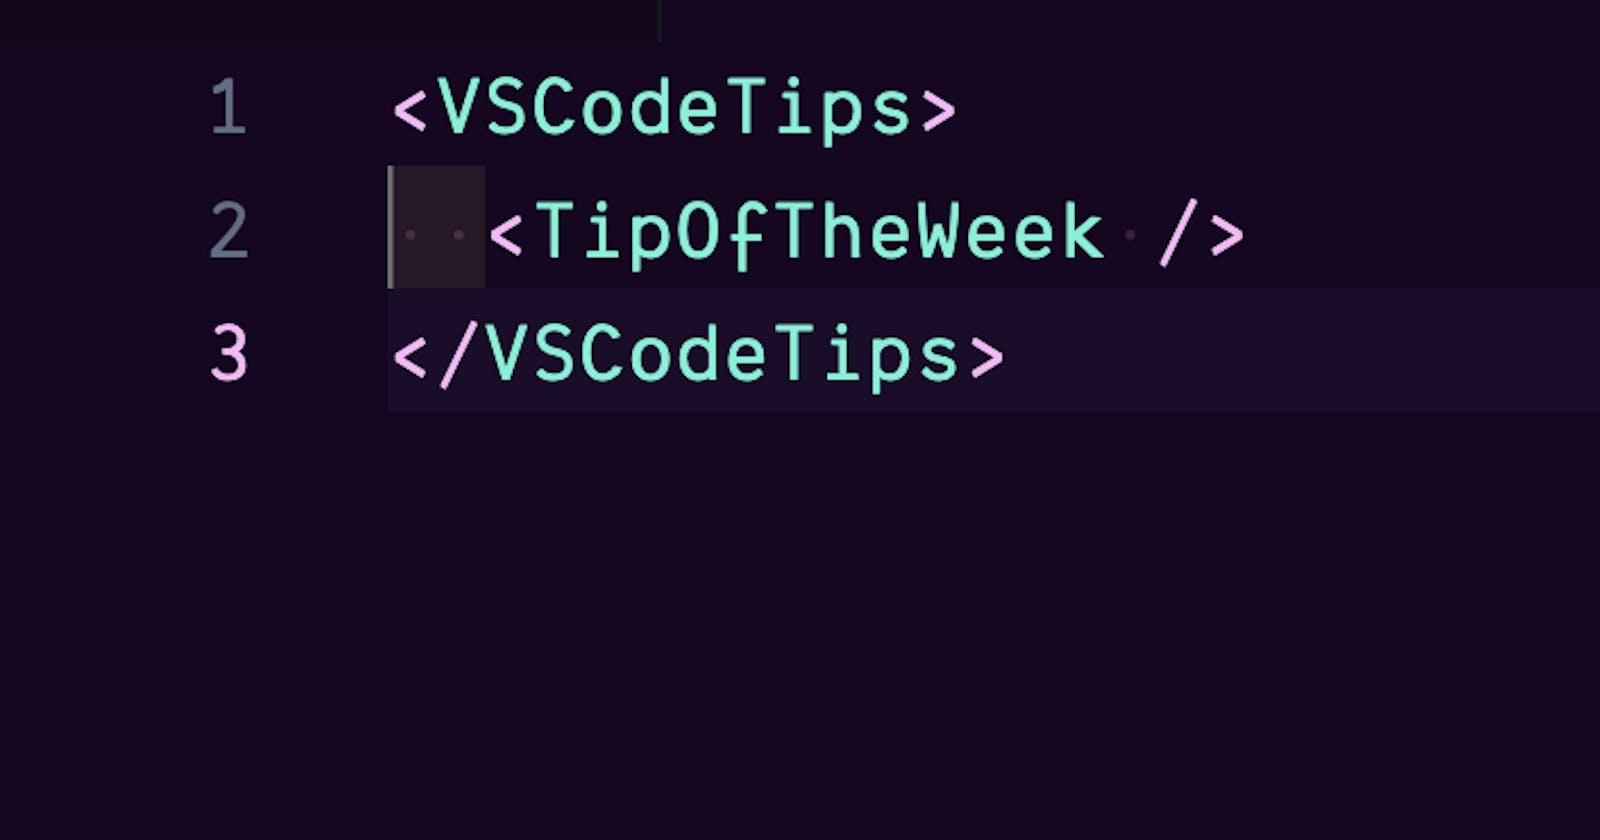 VS Code Tip of the Week: The Simple Browser